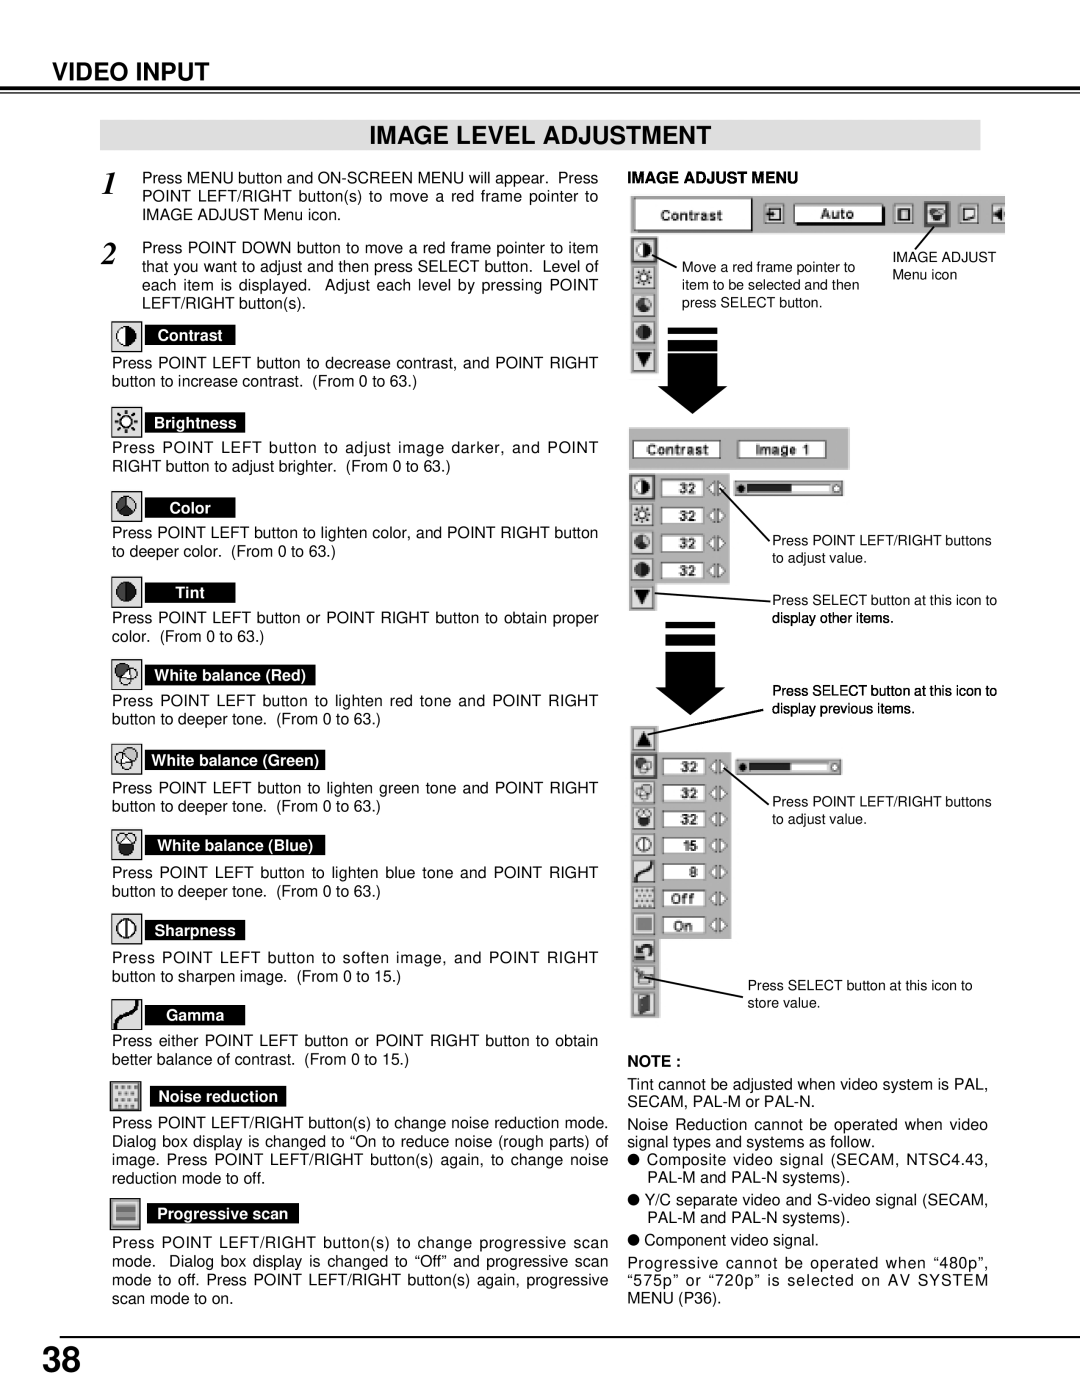 Eiki LC-XT2 instruction manual Video Input Image Level Adjustment 